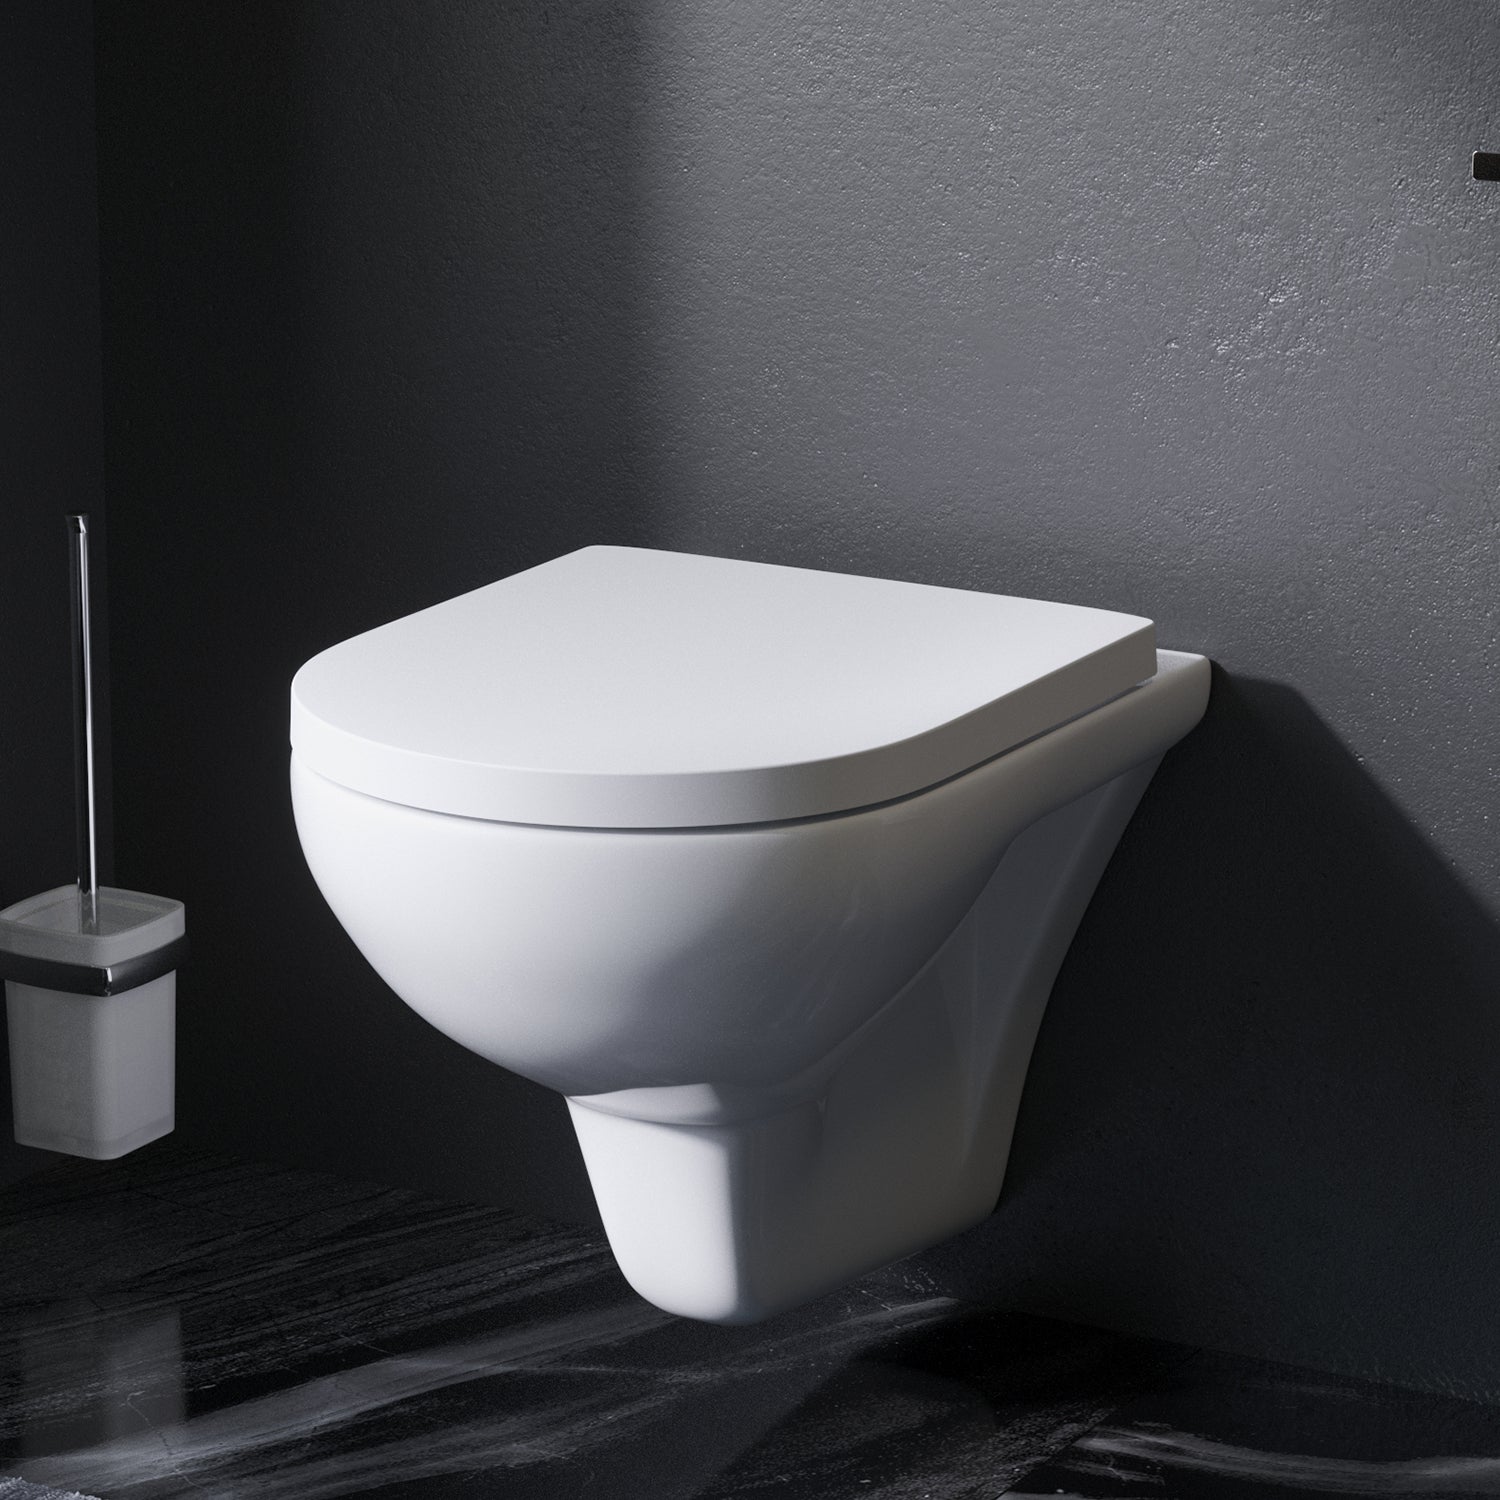 IIS90251.TA1700 Set: Wand-WC + Vorwandelement + Drückerplatte